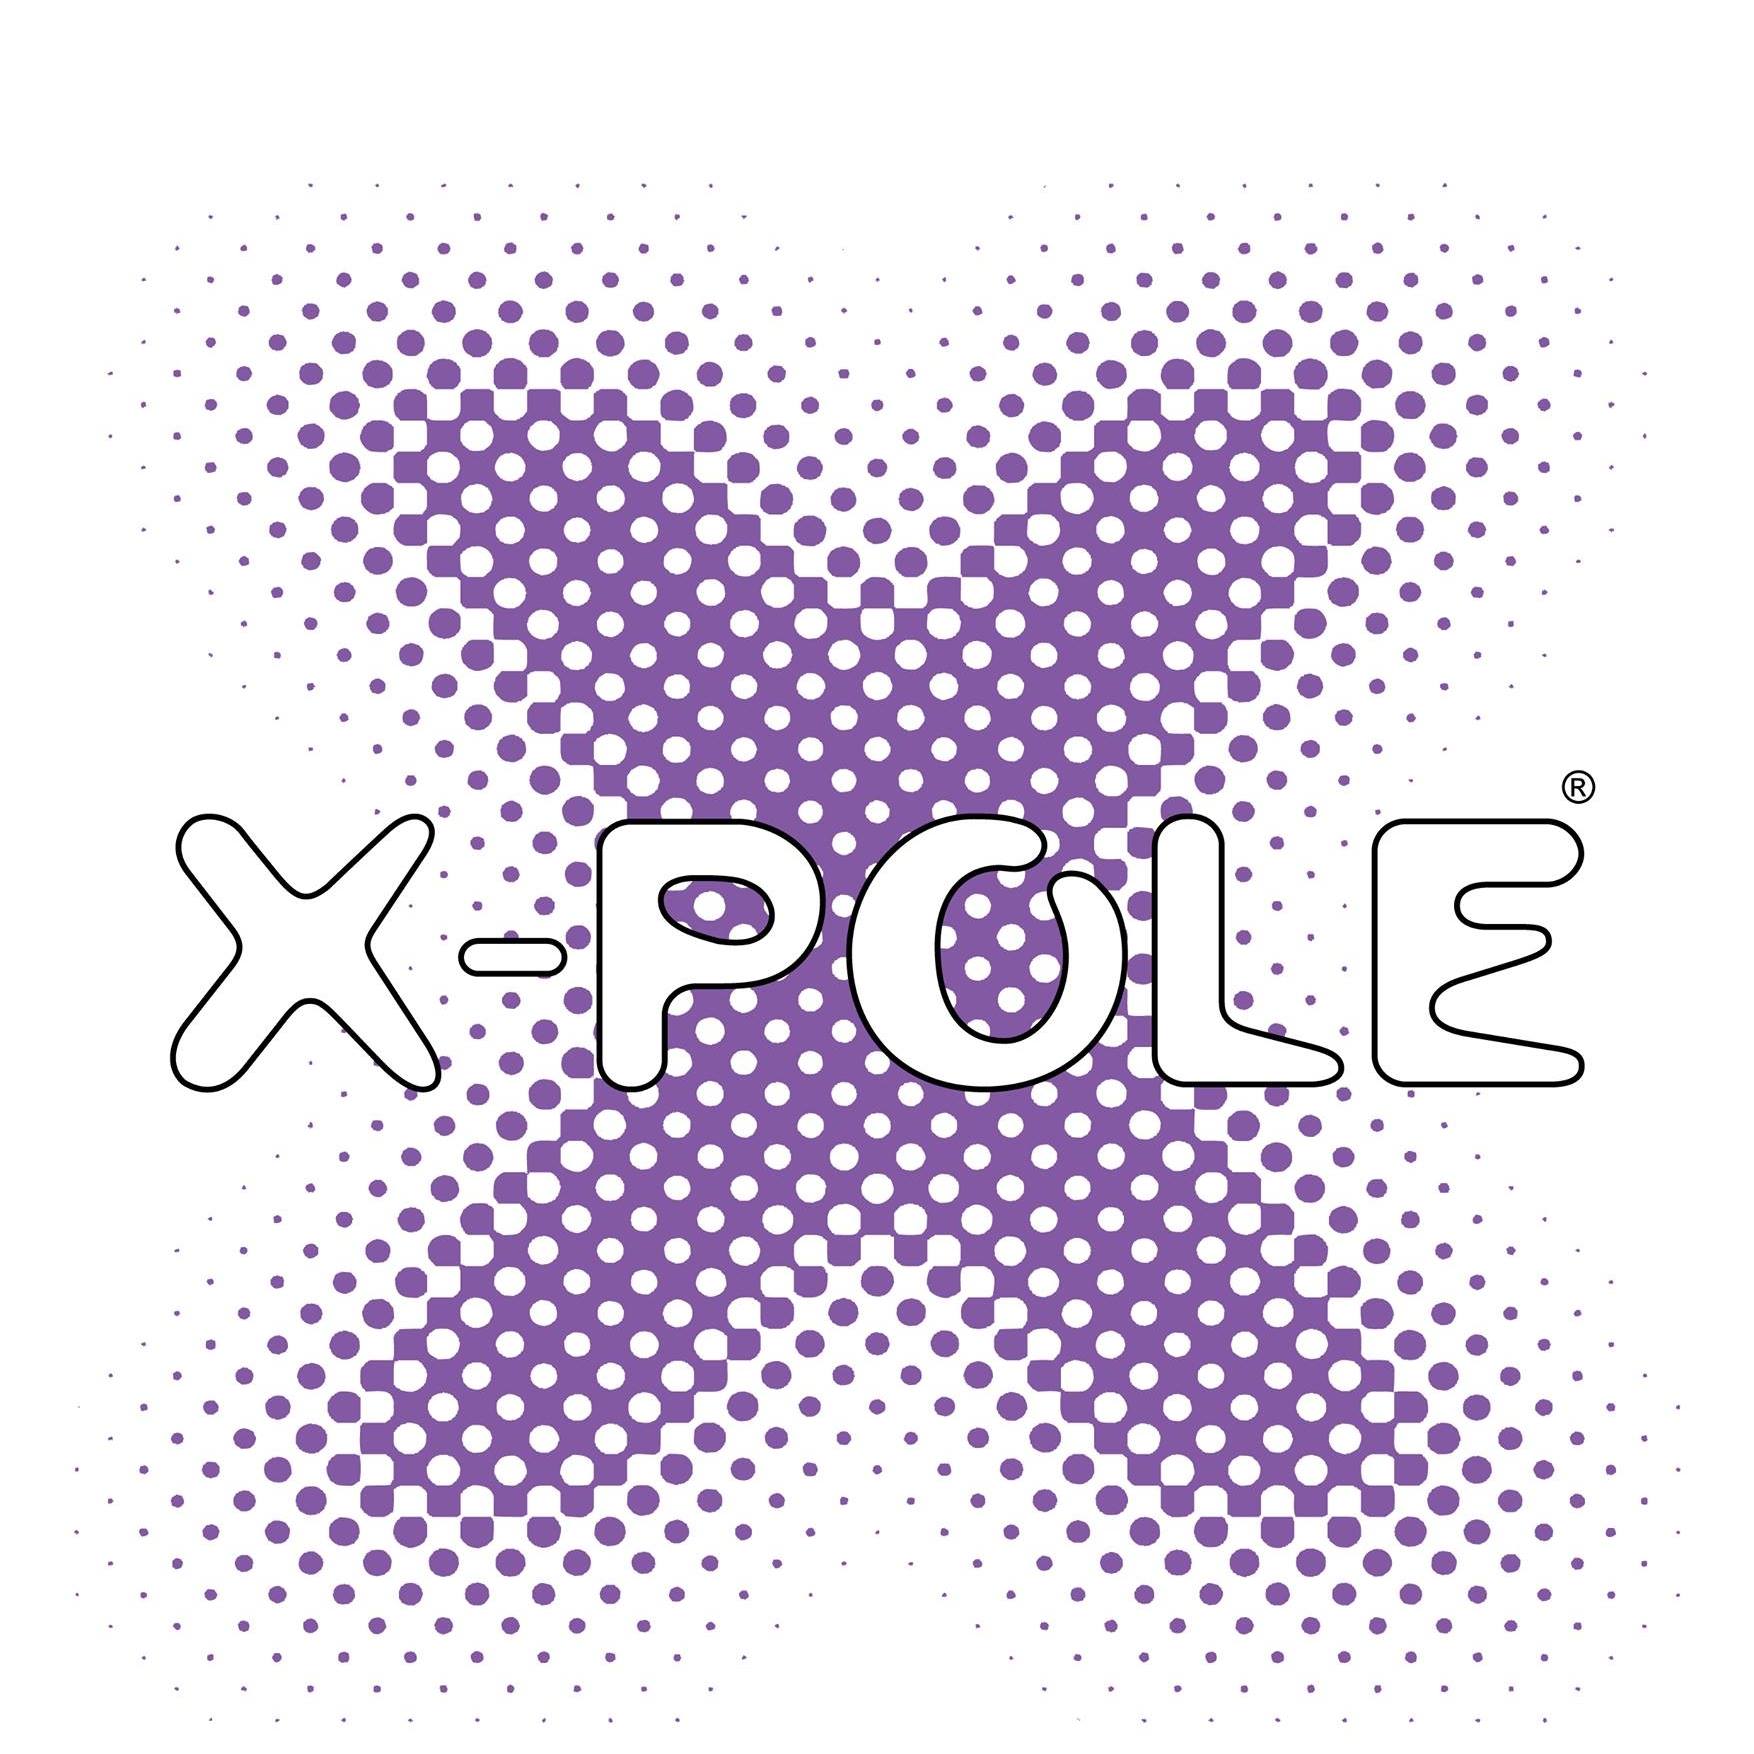 www.xpoleus.com